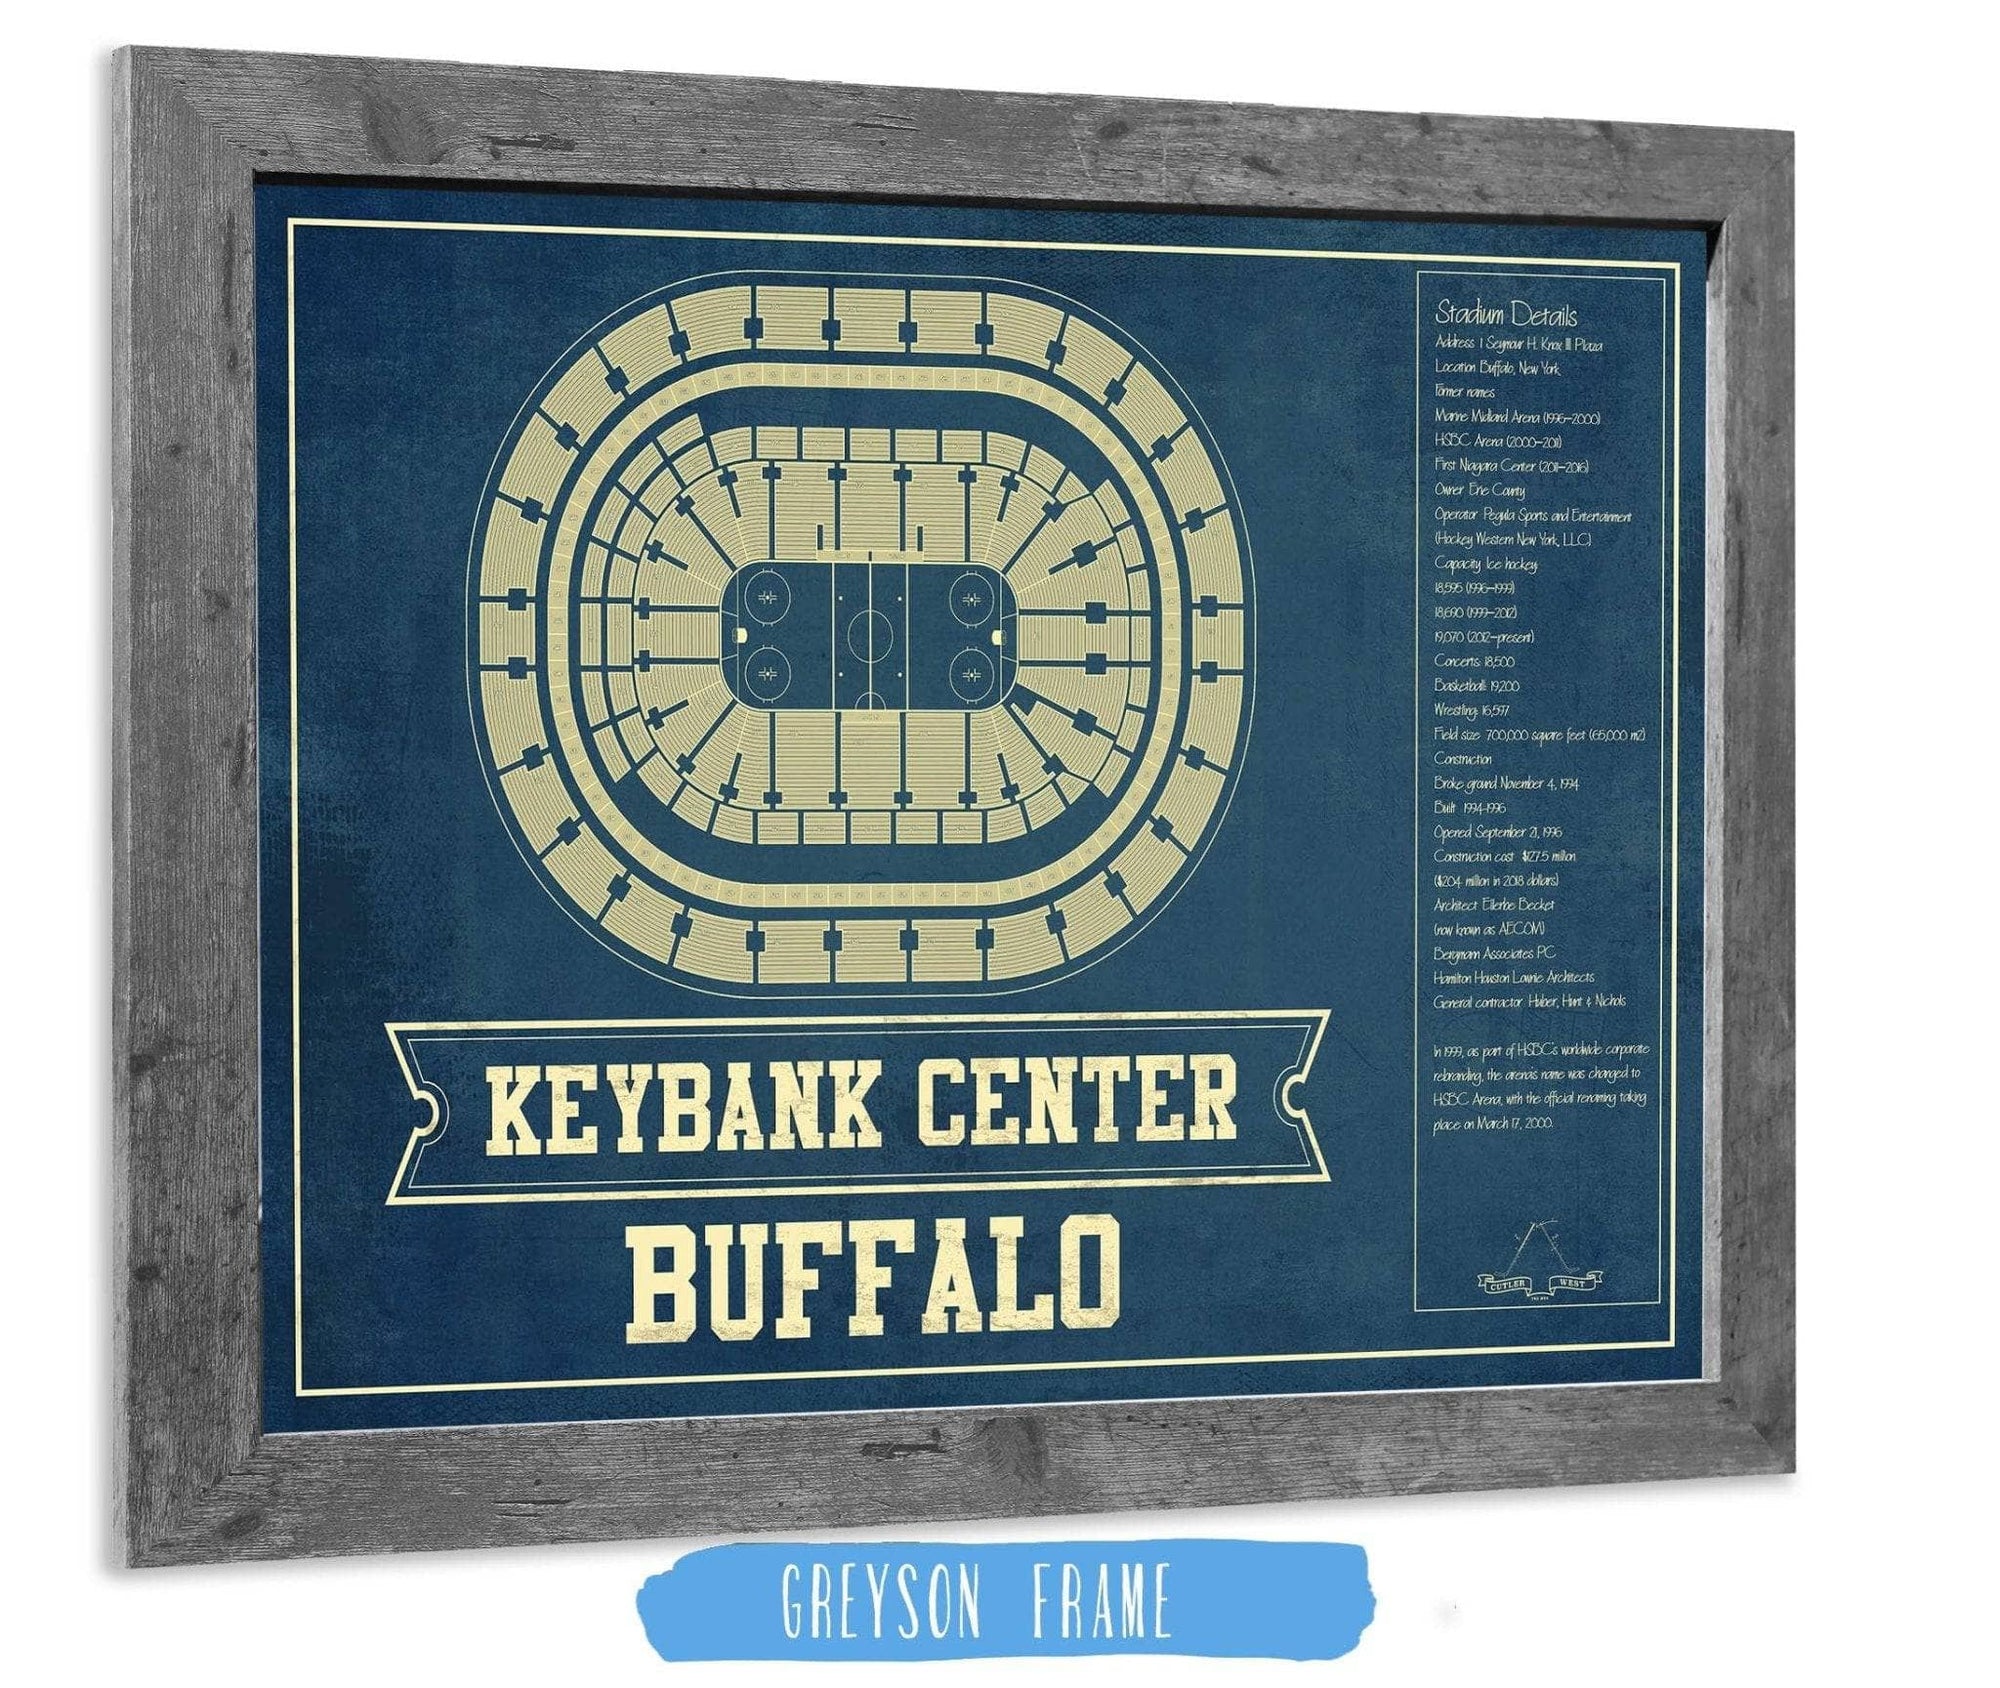 Cutler West 14" x 11" / Greyson Frame Buffalo Sabres - KeyBank Center Vintage Hockey Blueprint NHL Print 933350185_78616